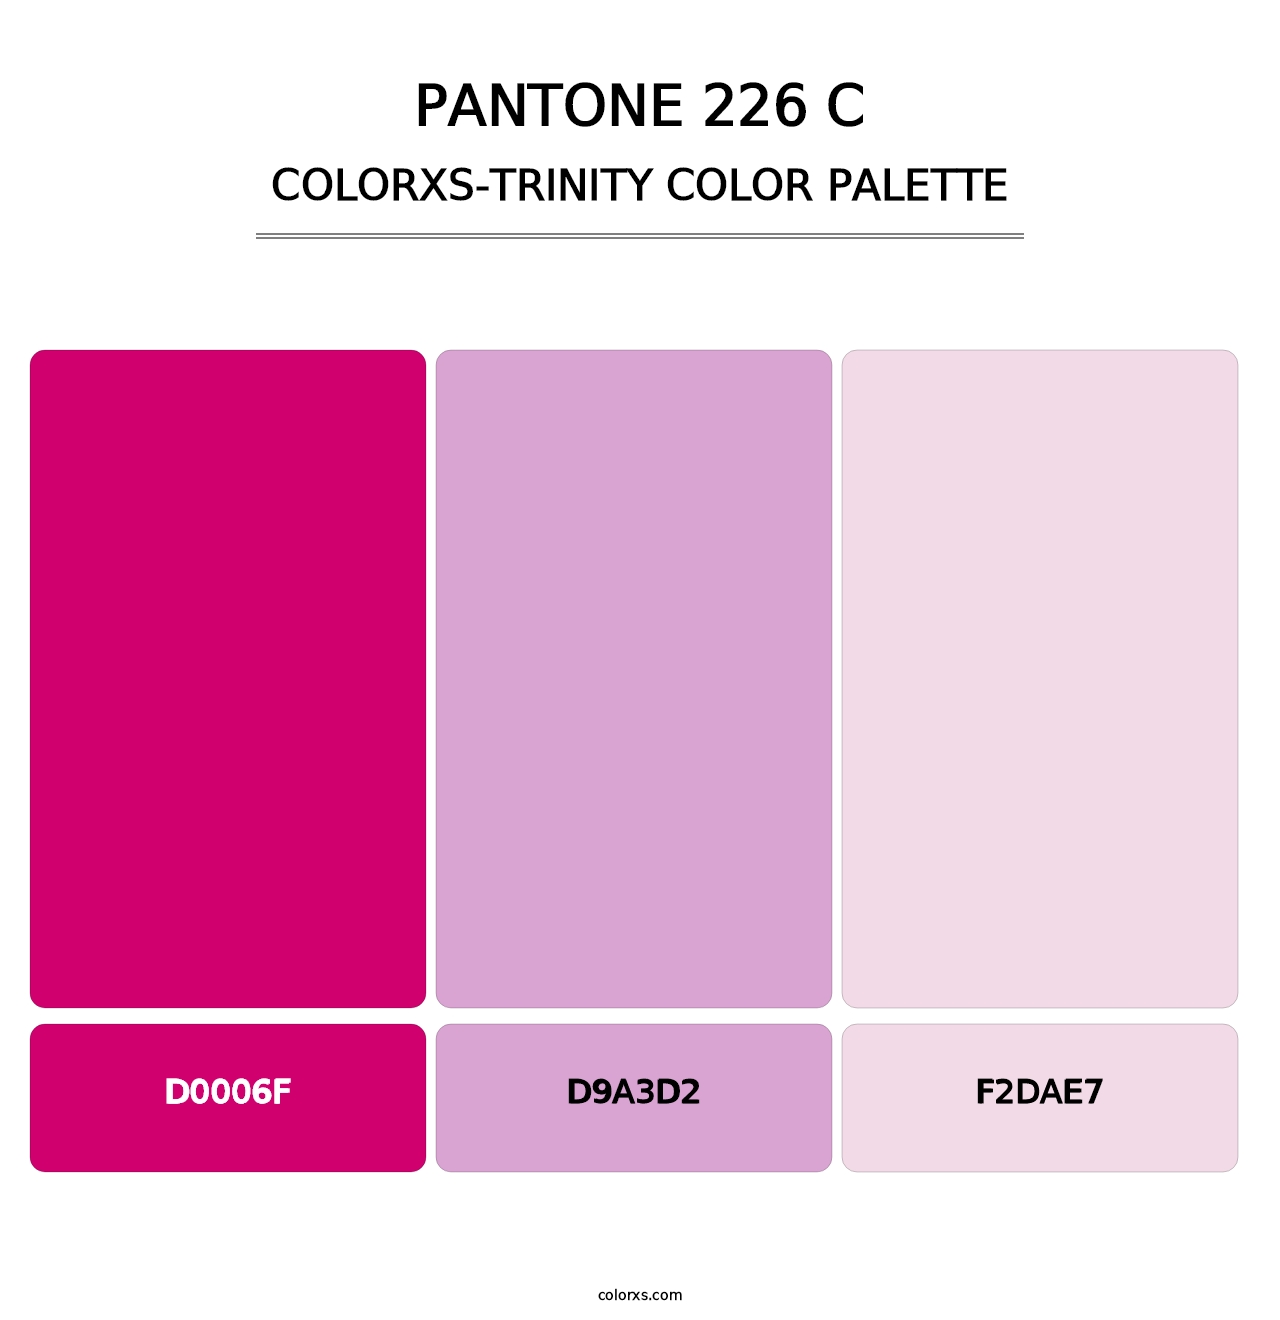 PANTONE 226 C - Colorxs Trinity Palette